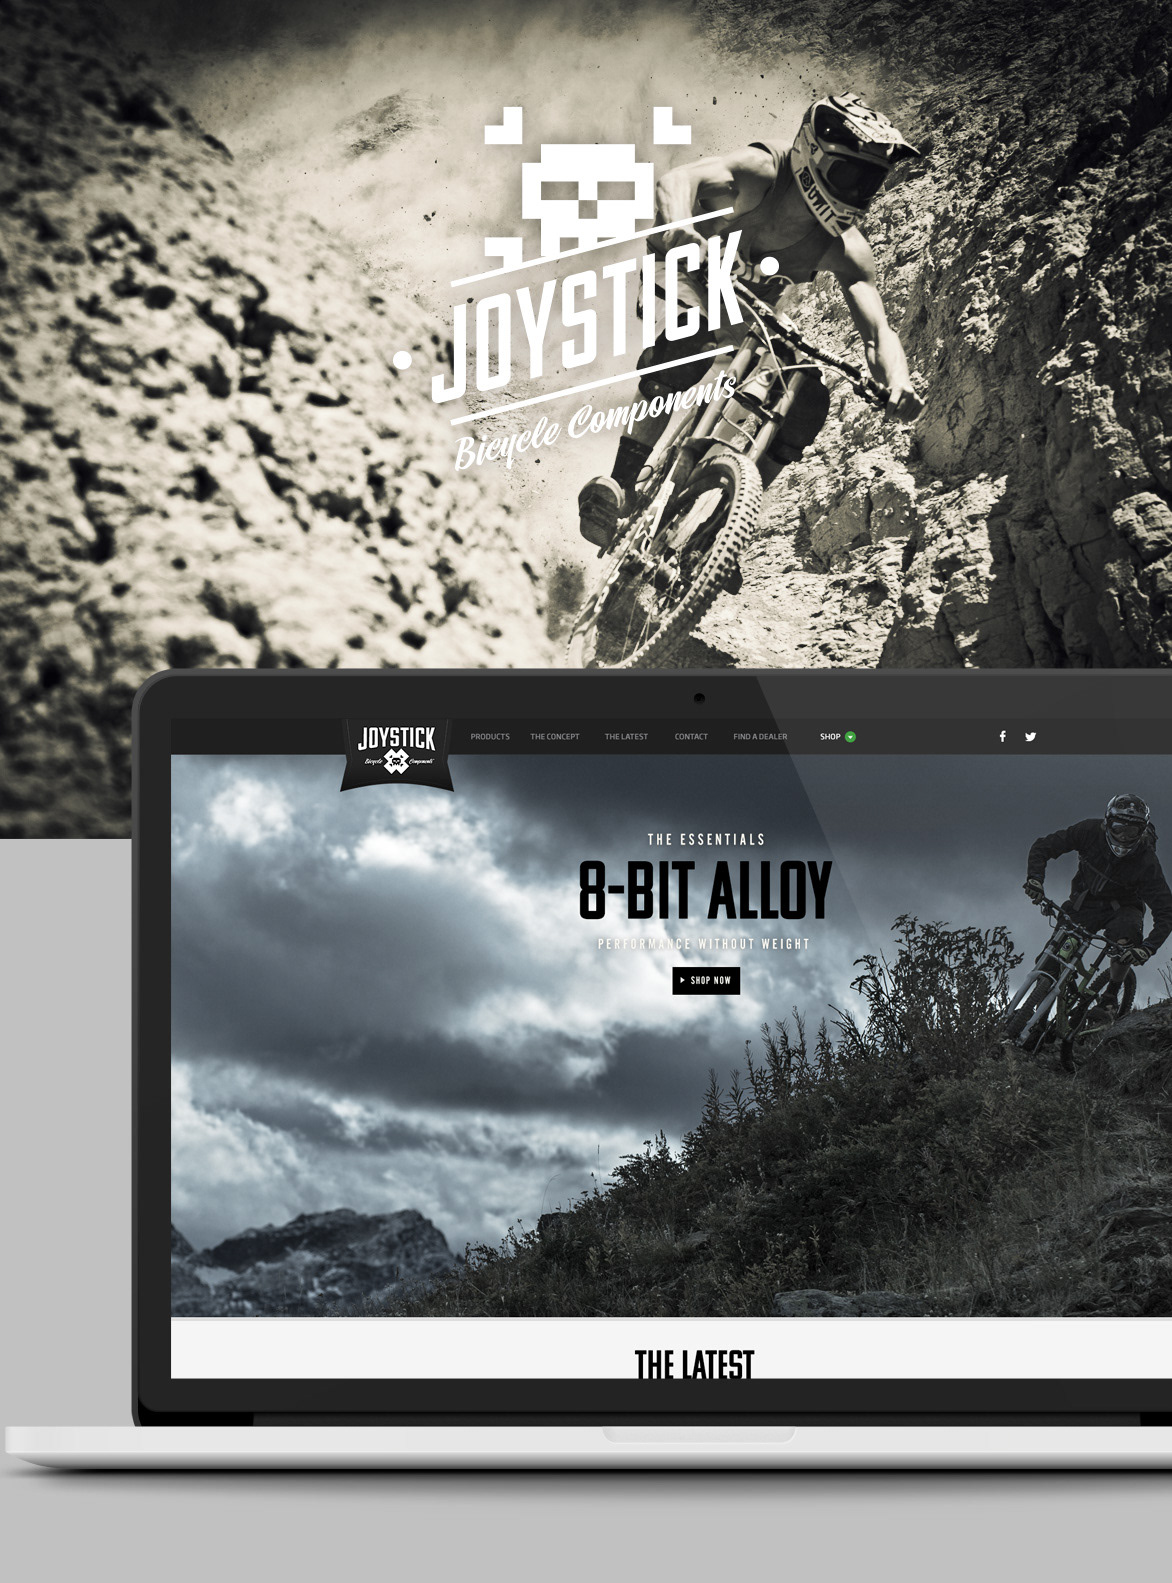 joystick mountain bike action sports full screen wordpress